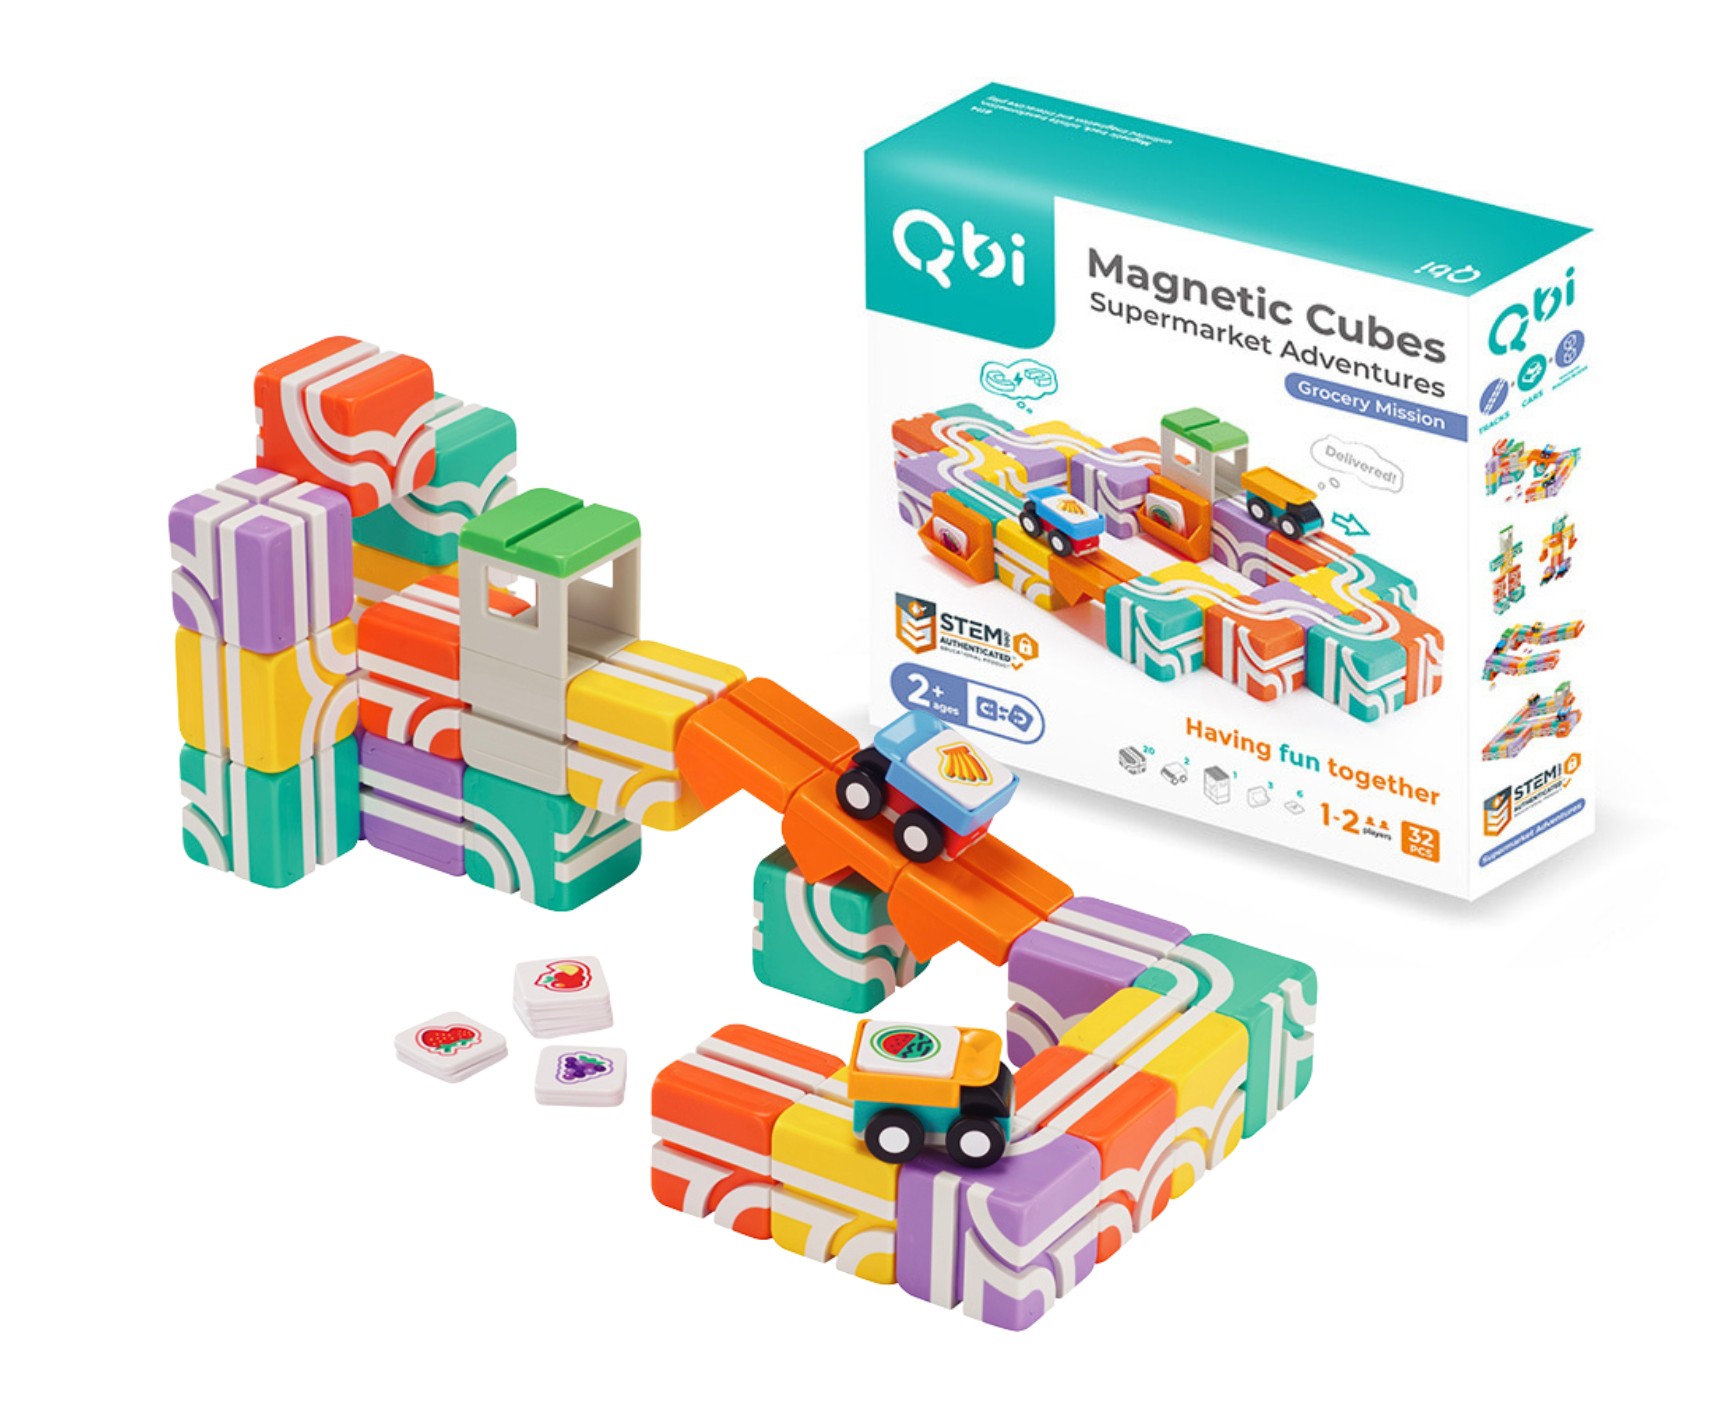 Qbi(Qbi toy) | ENGAGING TOYS 世界の知育玩具・おもちゃを取り扱う 